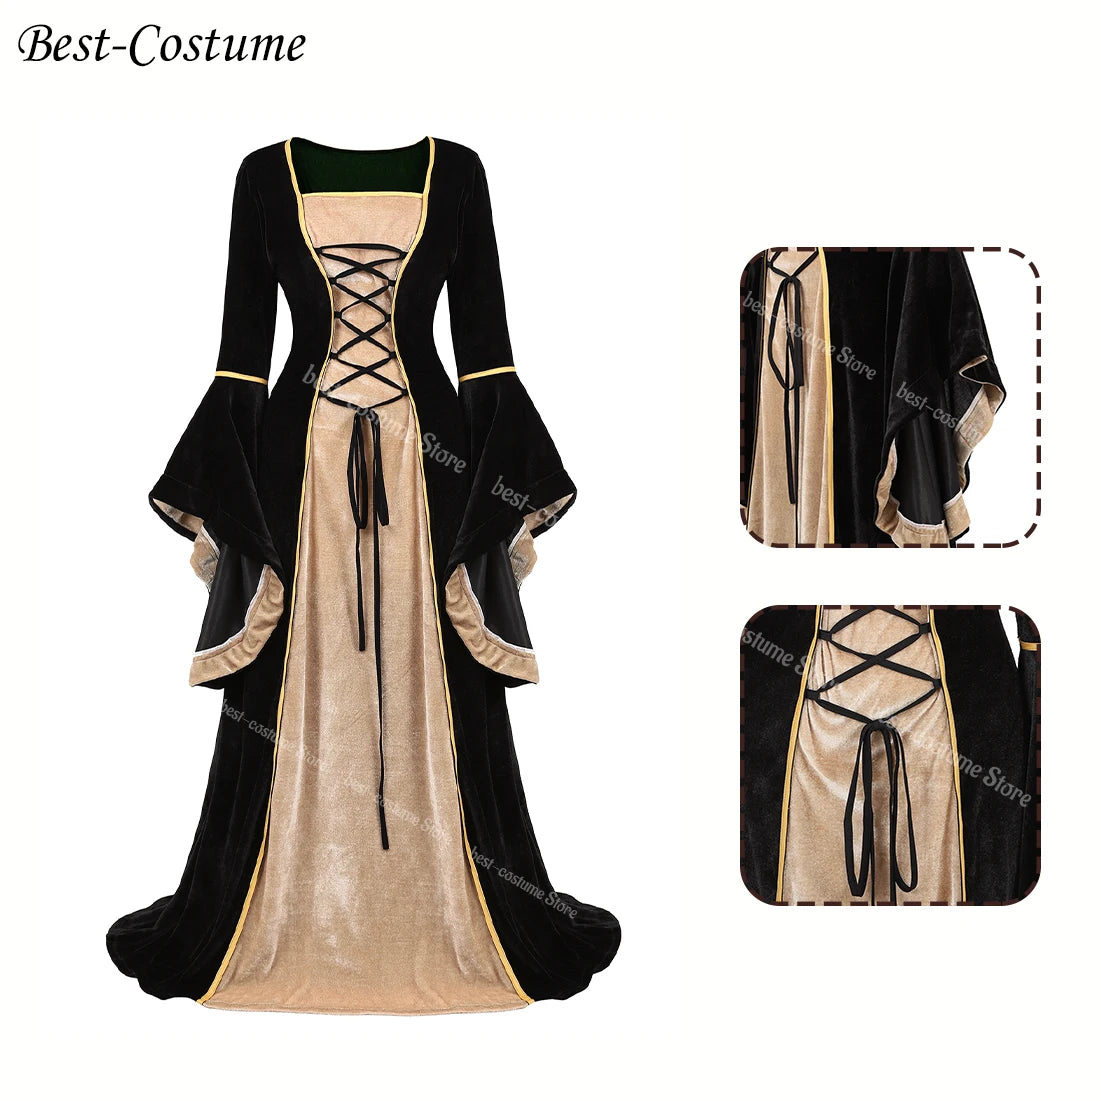 Women Medieval Renaissance Dress Cosplay Halloween Costumes Plus Size Elegant Velvet Dress Long Sleeves Green Victorian Gown